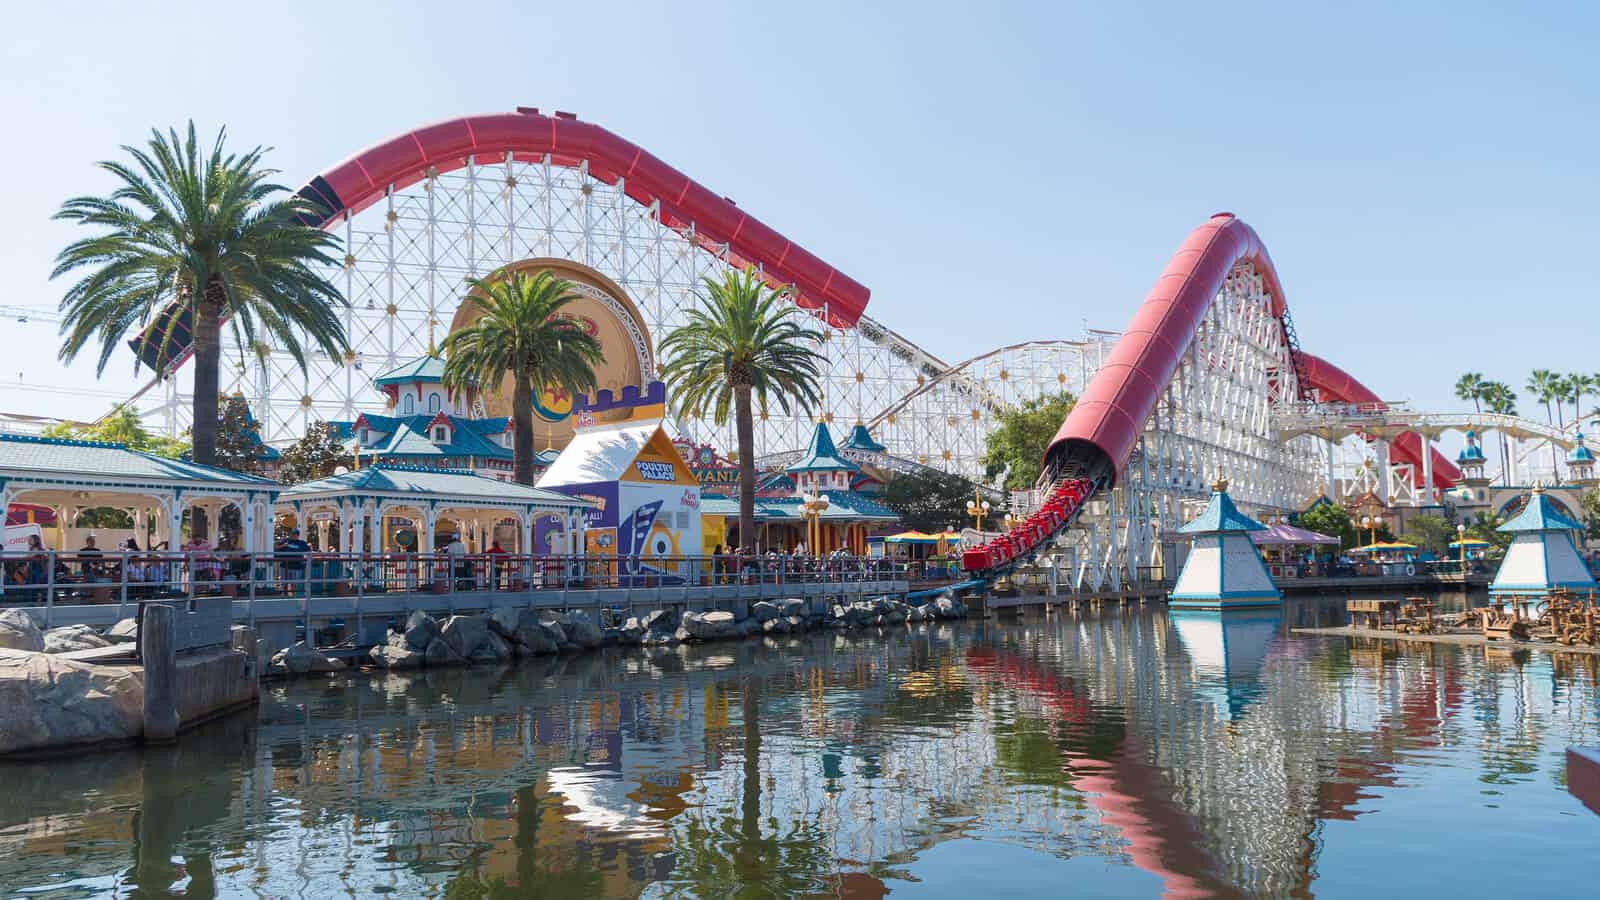 Disneyland vs. California Adventure. 
Guests can find the Incredicoaster in California Adventure Park.